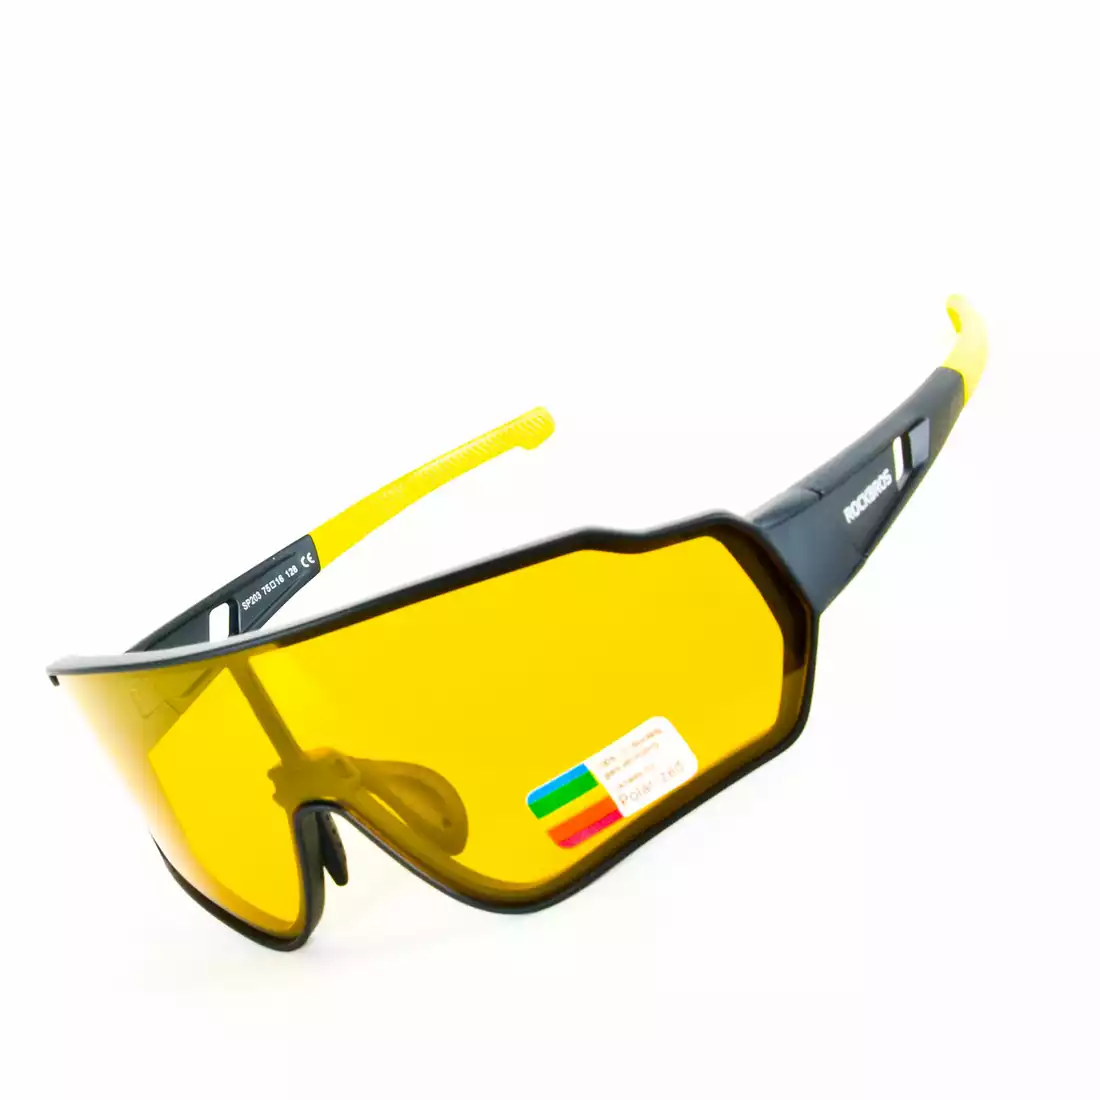 RockBros Cycling Sunglasses Eyewear Goggles Sport Glasses UV400 Len Yellow 